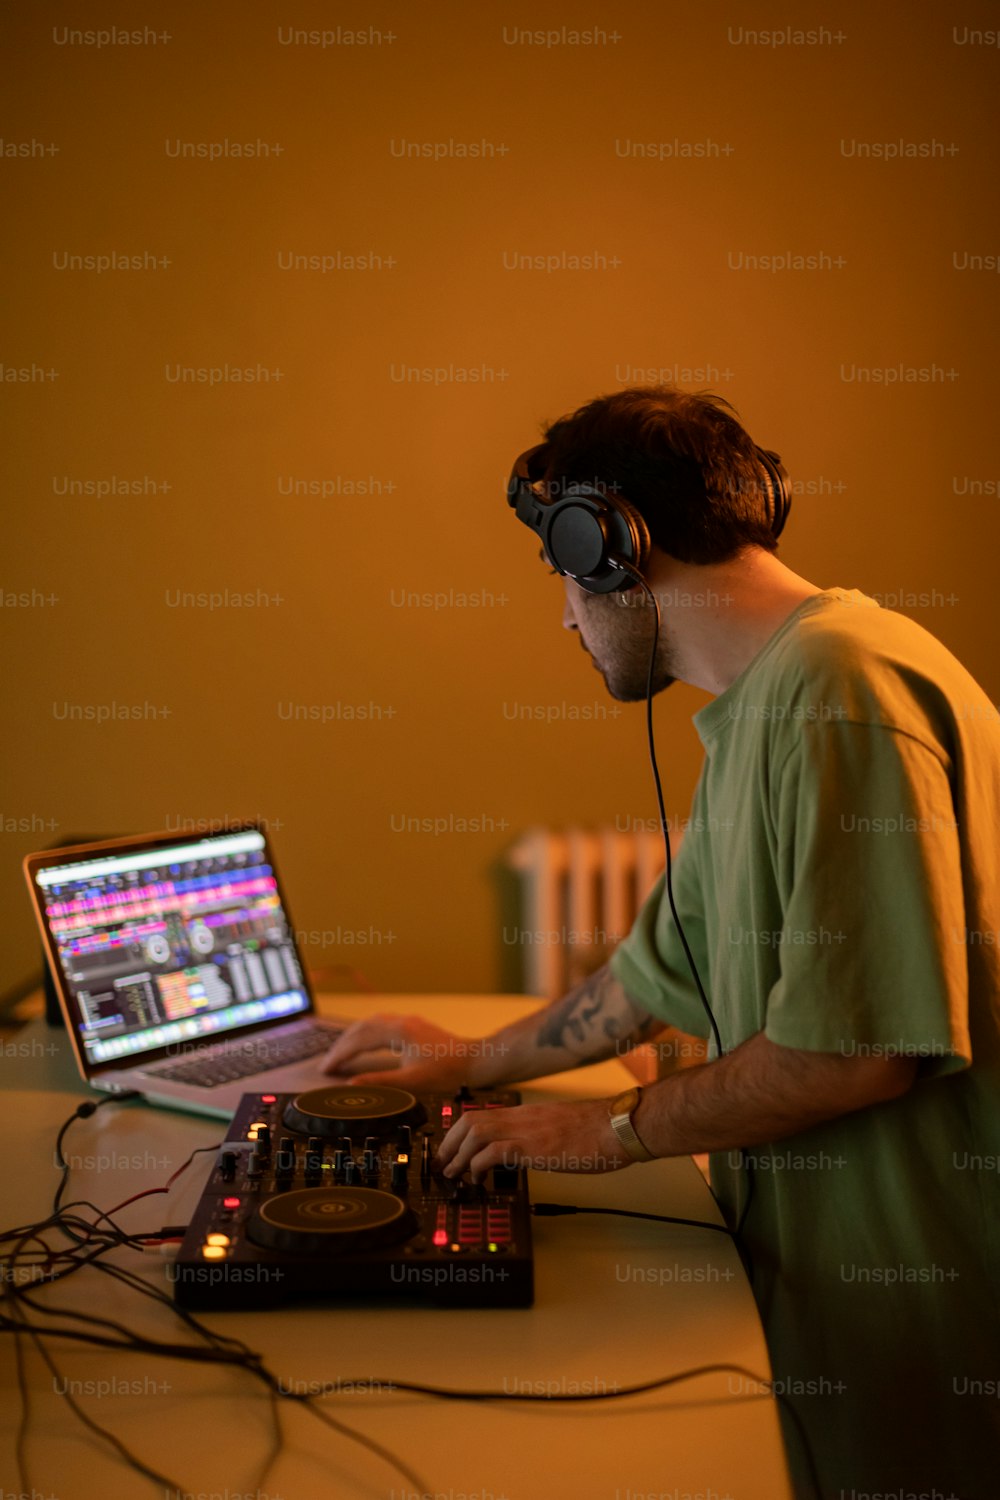 a man wearing headphones is using a laptop